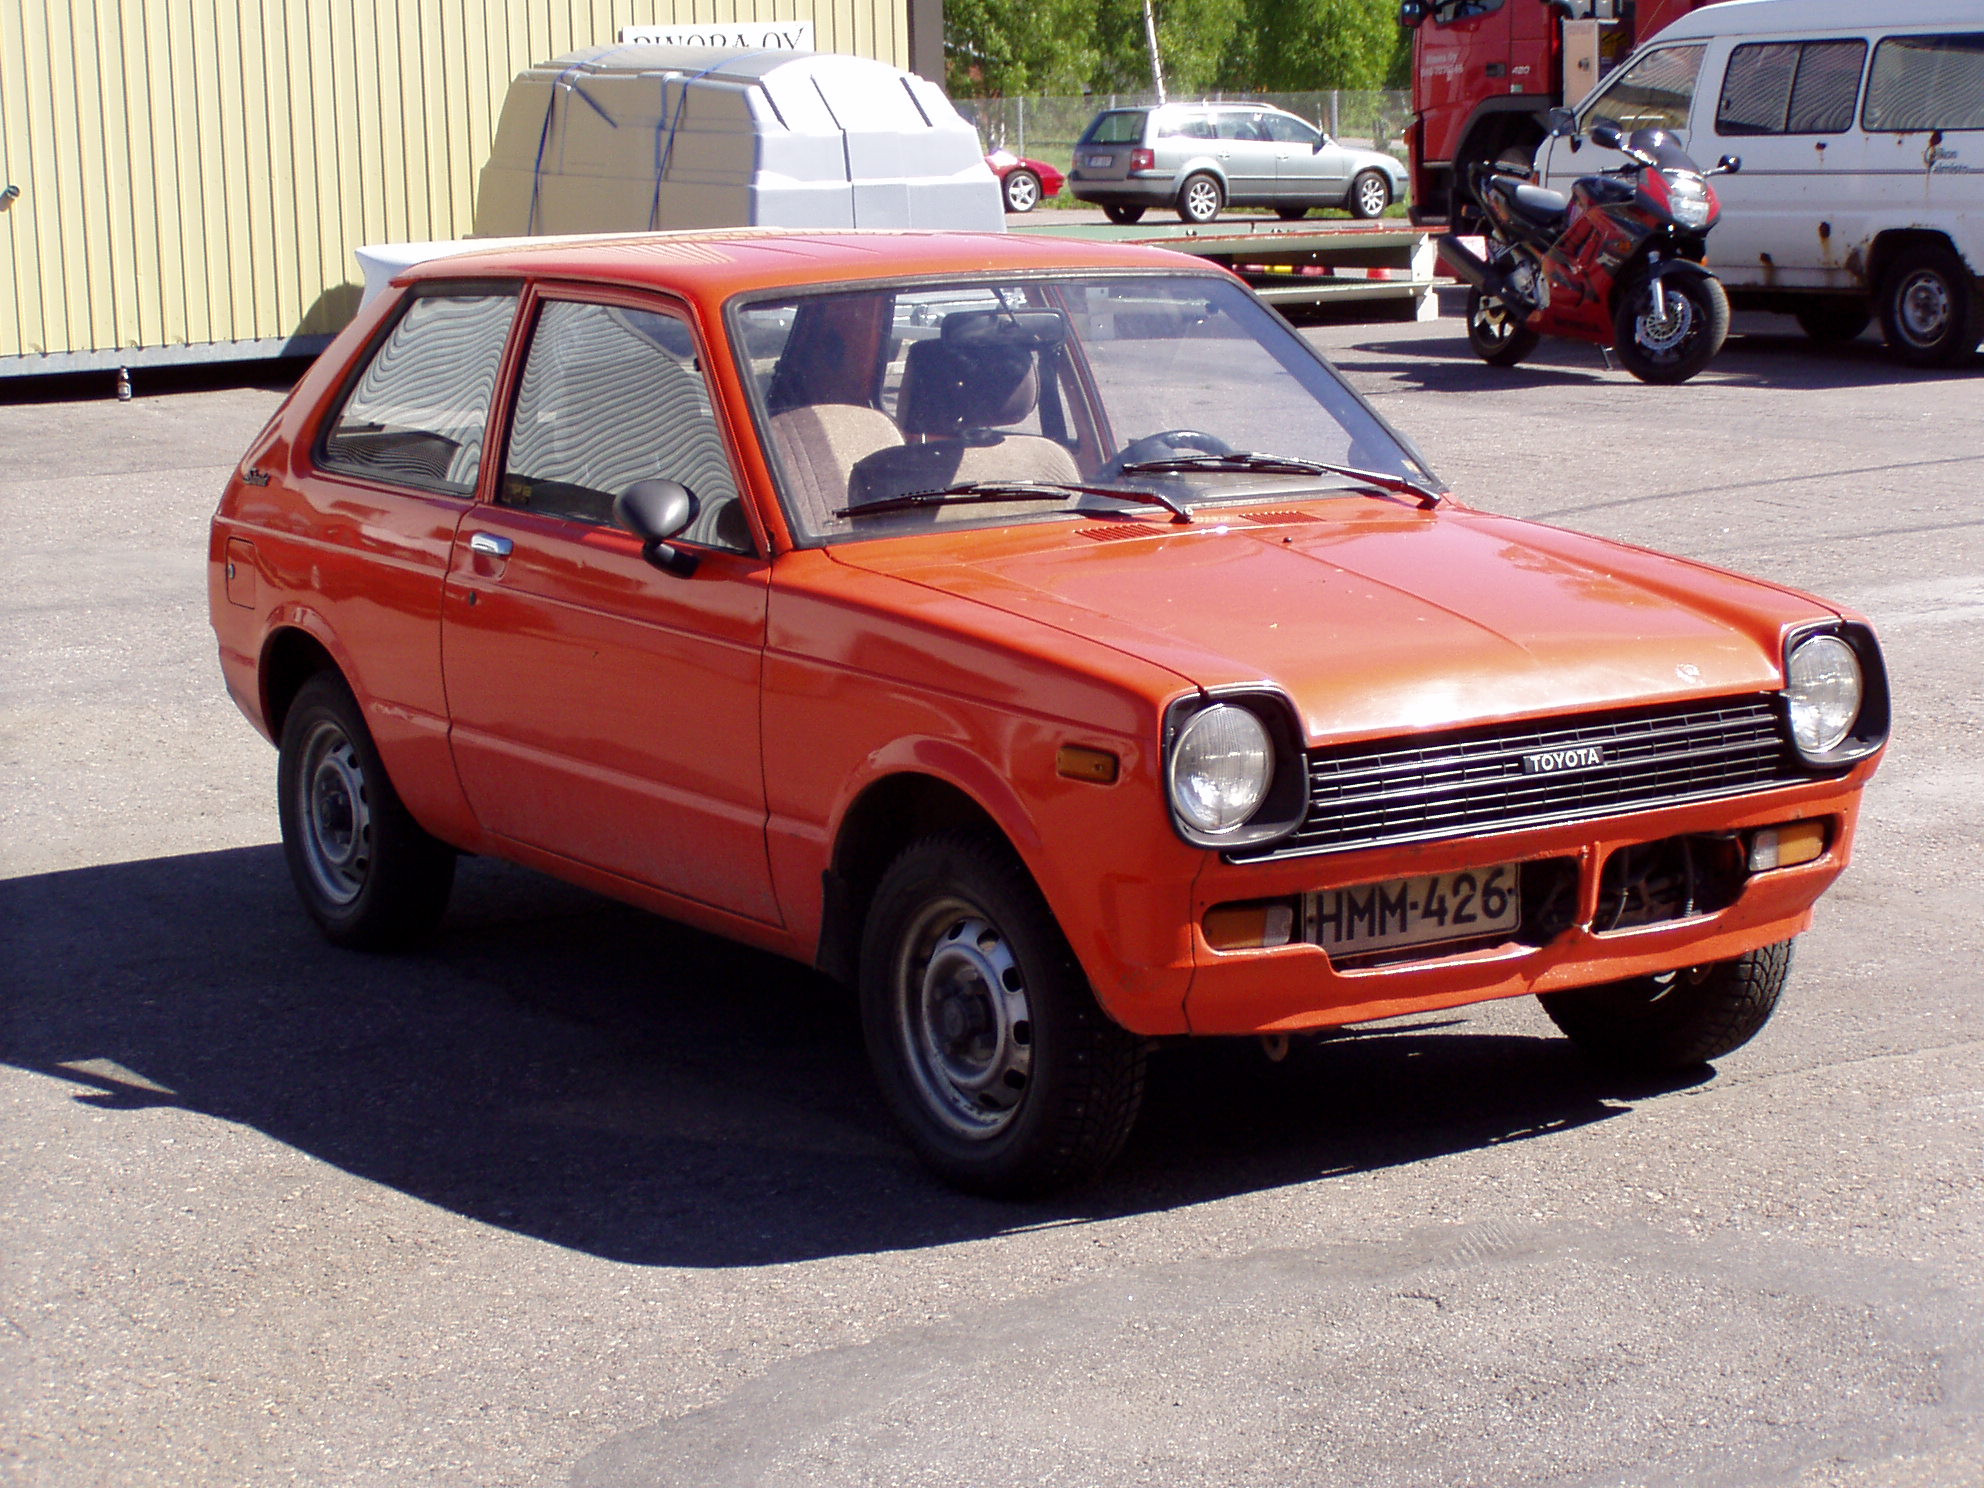 Toyota Starlet KP61 (Kakkos-Starlet), KesÃ¤ltÃ¤ 2005, takalippaa ei enÃ¤Ã¤ ole. KP62 Oranssi Starlet